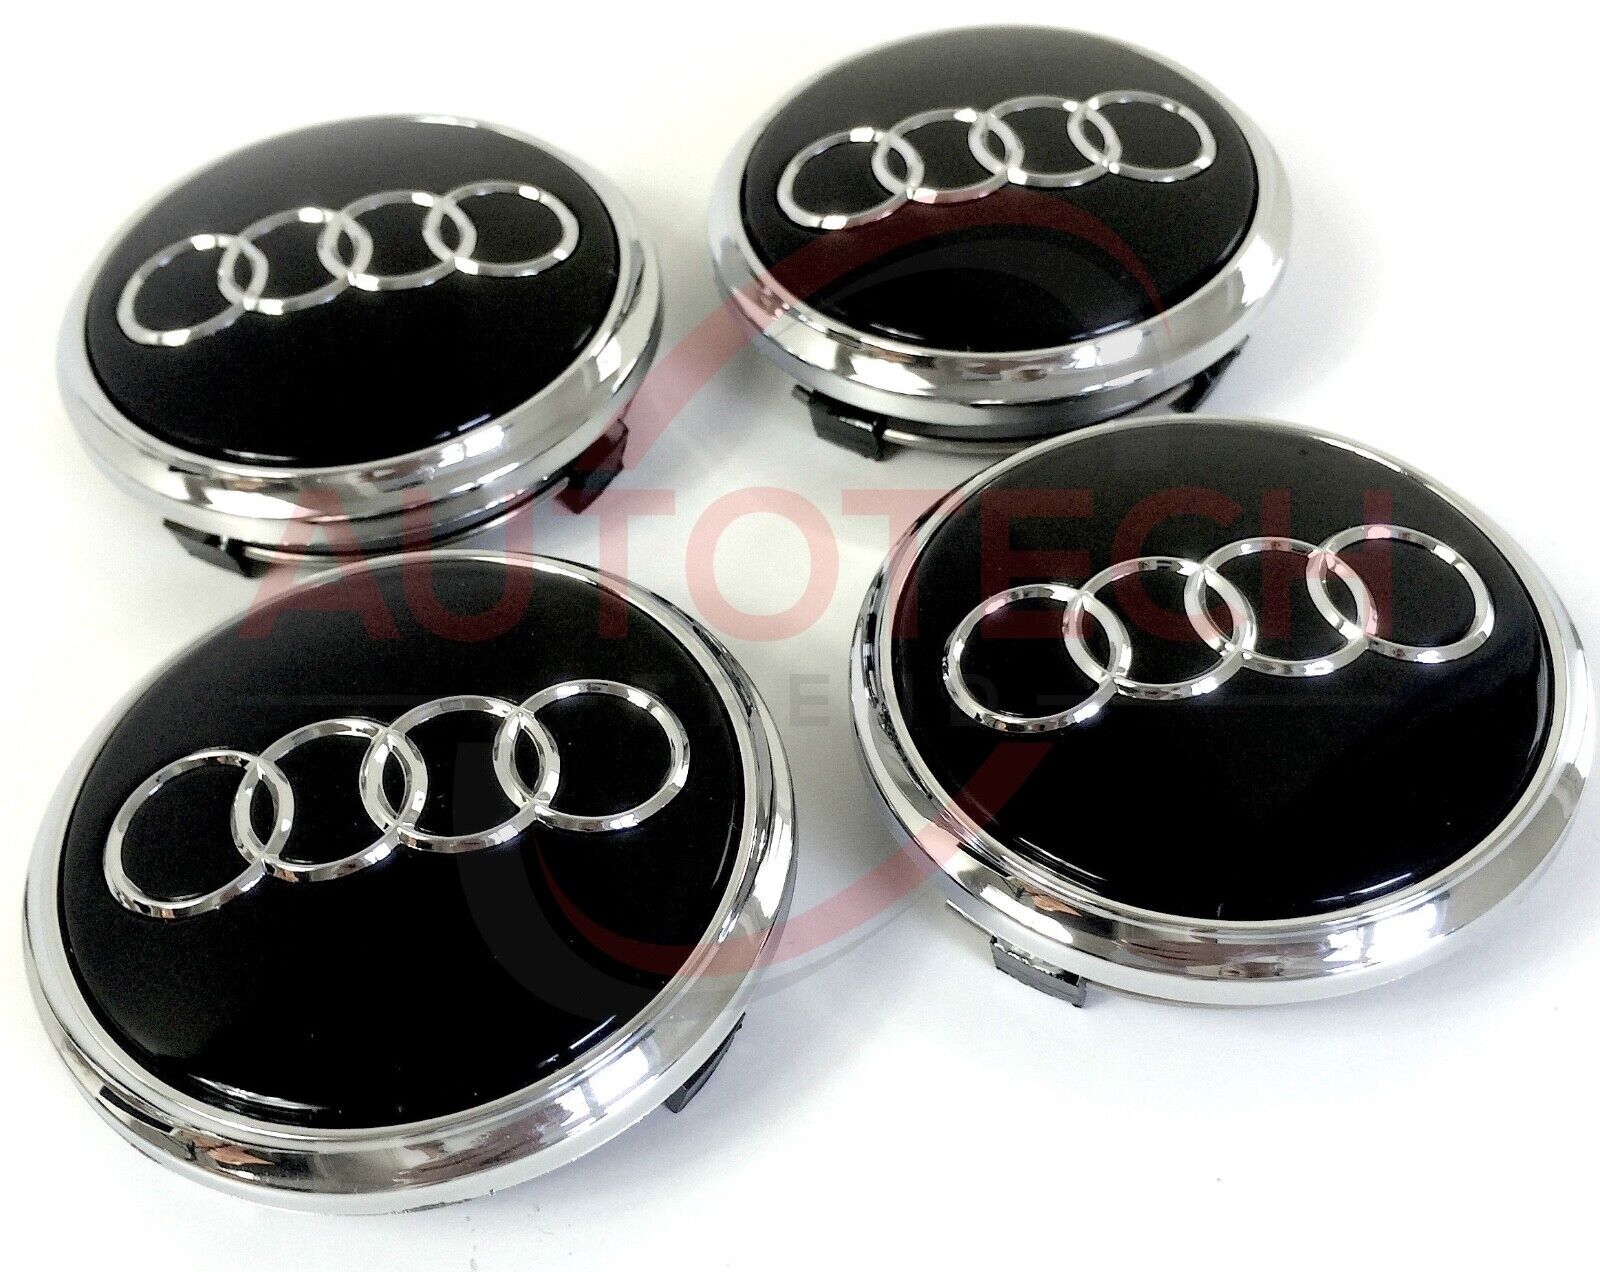 Audi 69mm Black Chrome Wheel Rim Center Hub Caps Emblem 4PC Set 4B0601170A